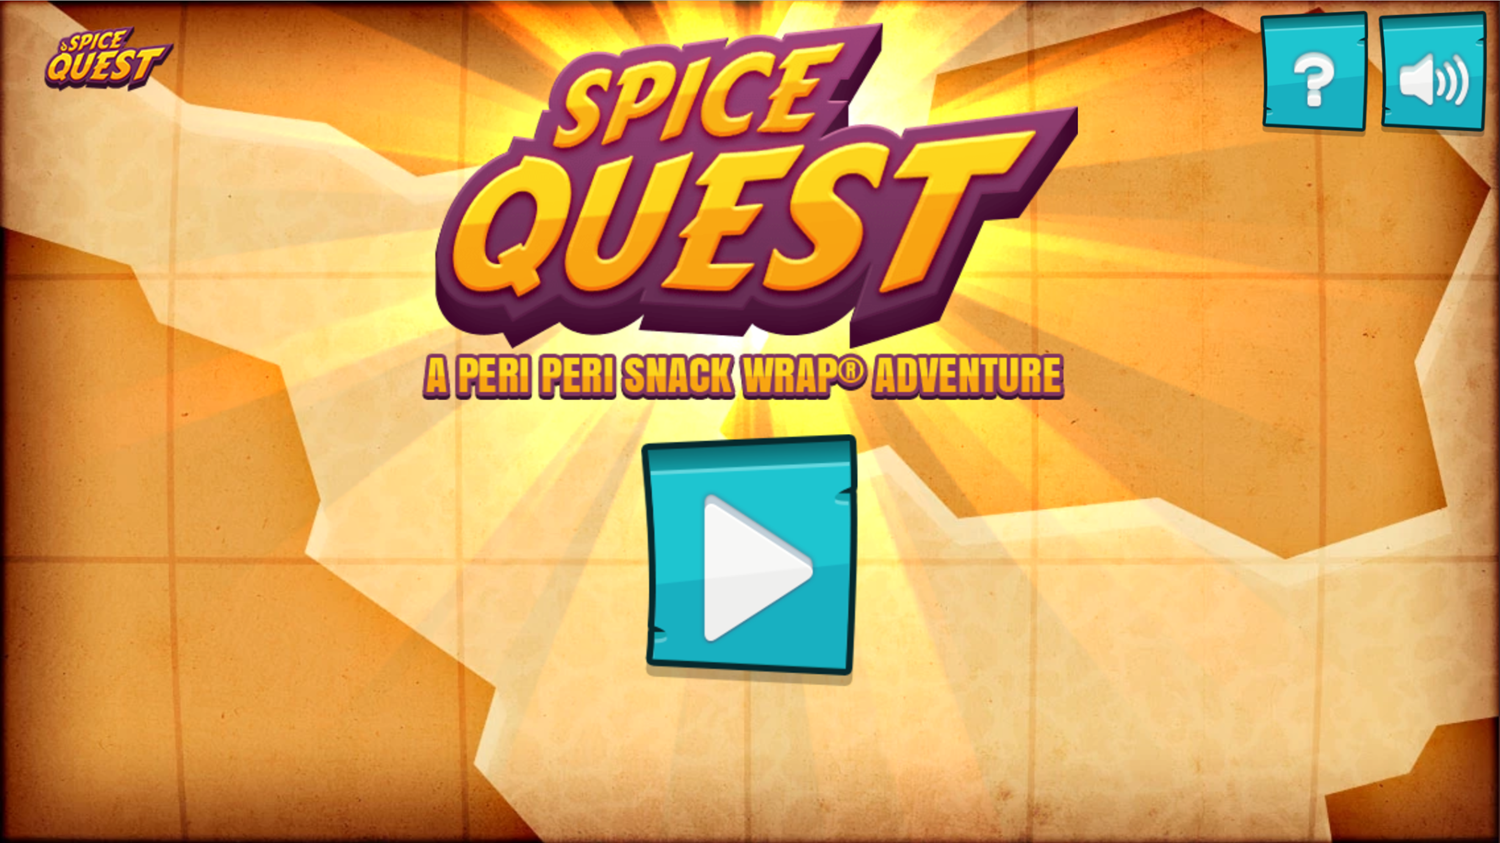 Spice Quest Game Welcome Screen Screenshot.